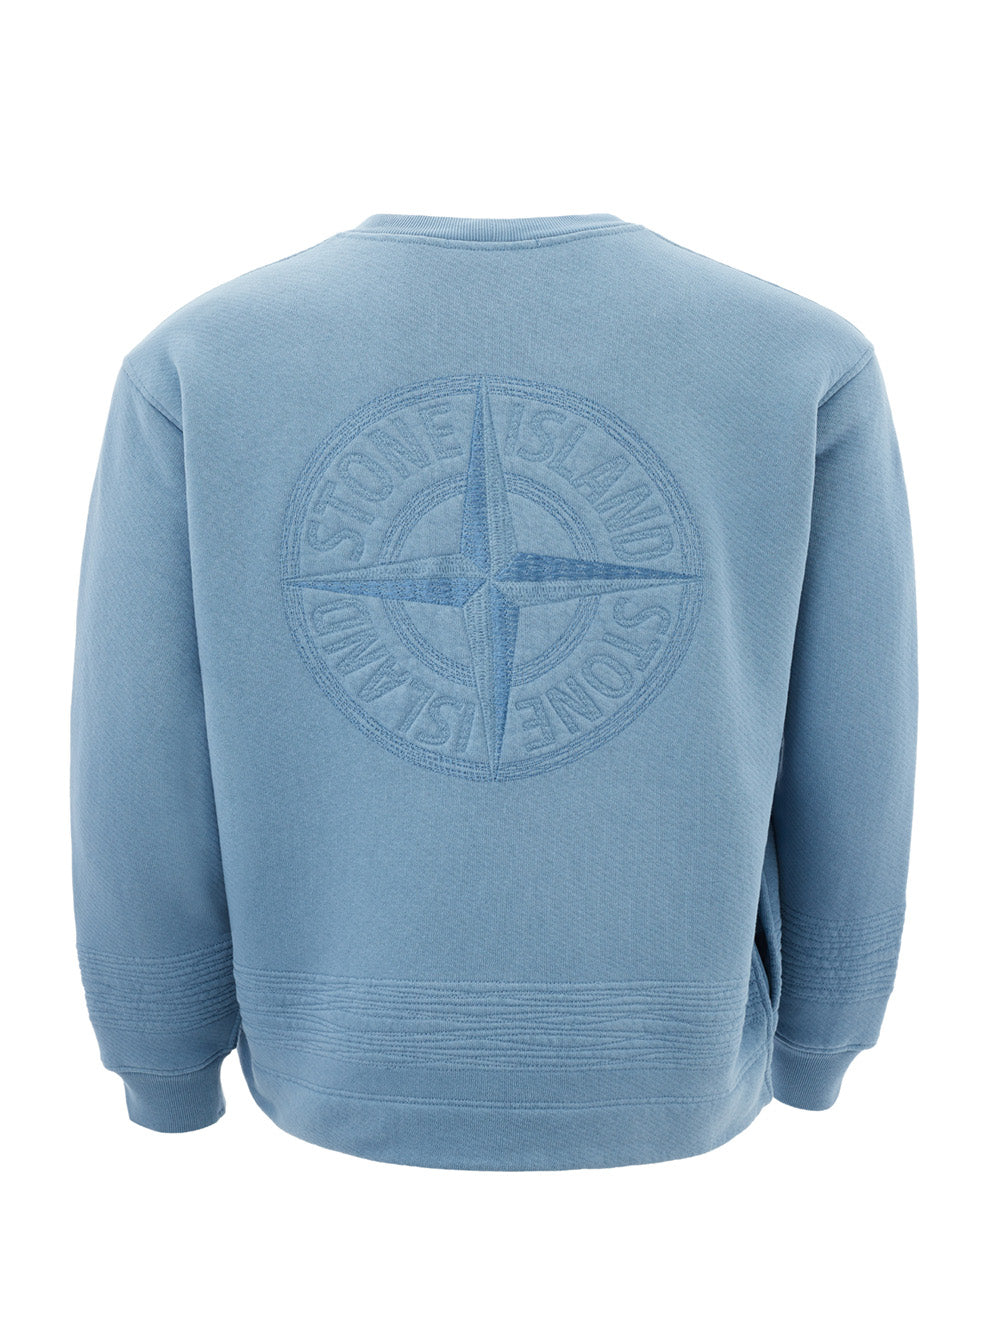 Stone Island Light Blue Cotton Compass Sweatshirt